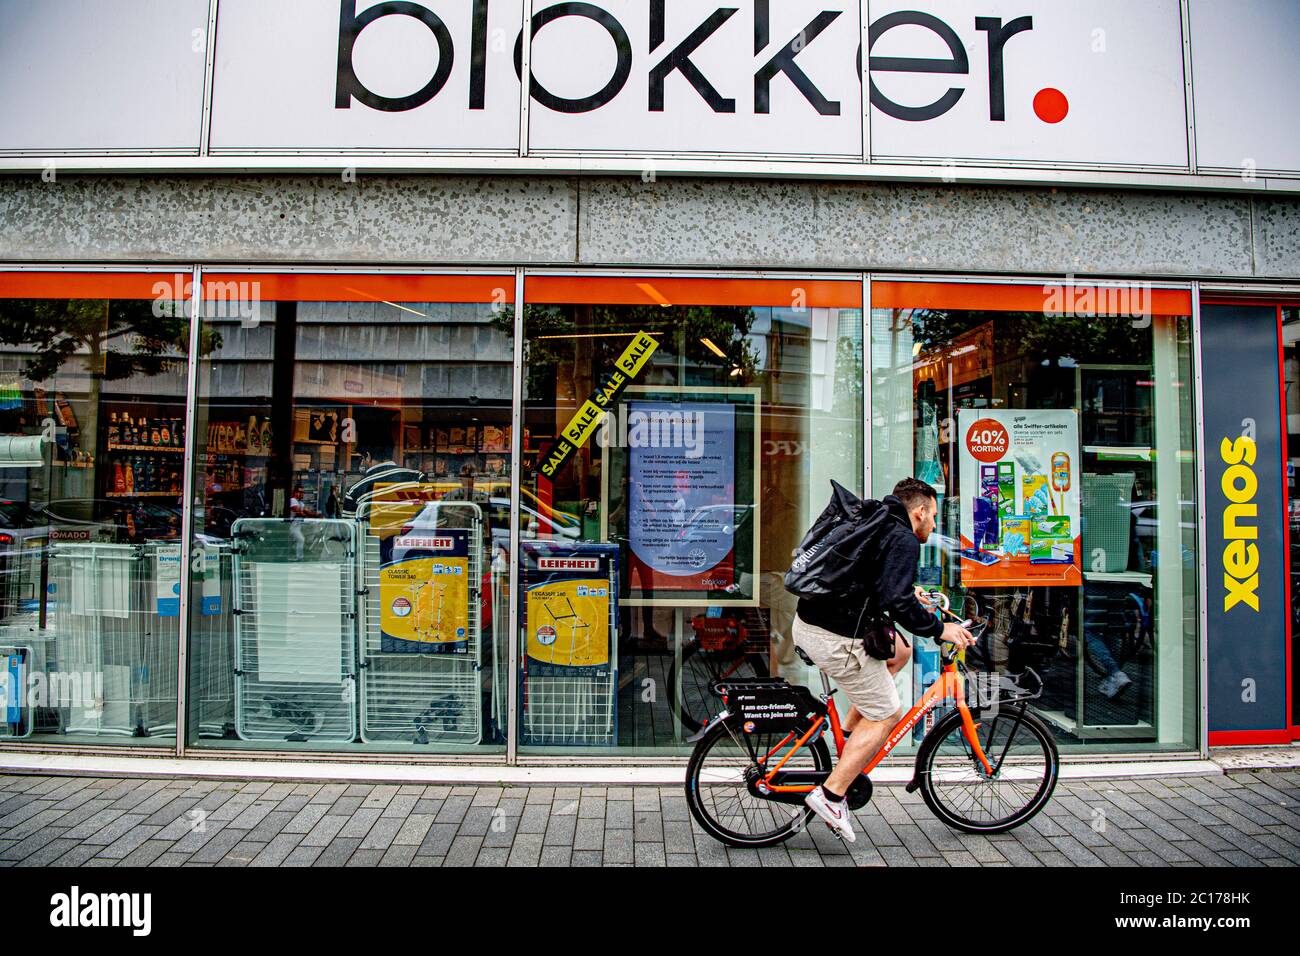 Blokker in Rotterdam Photo - Alamy